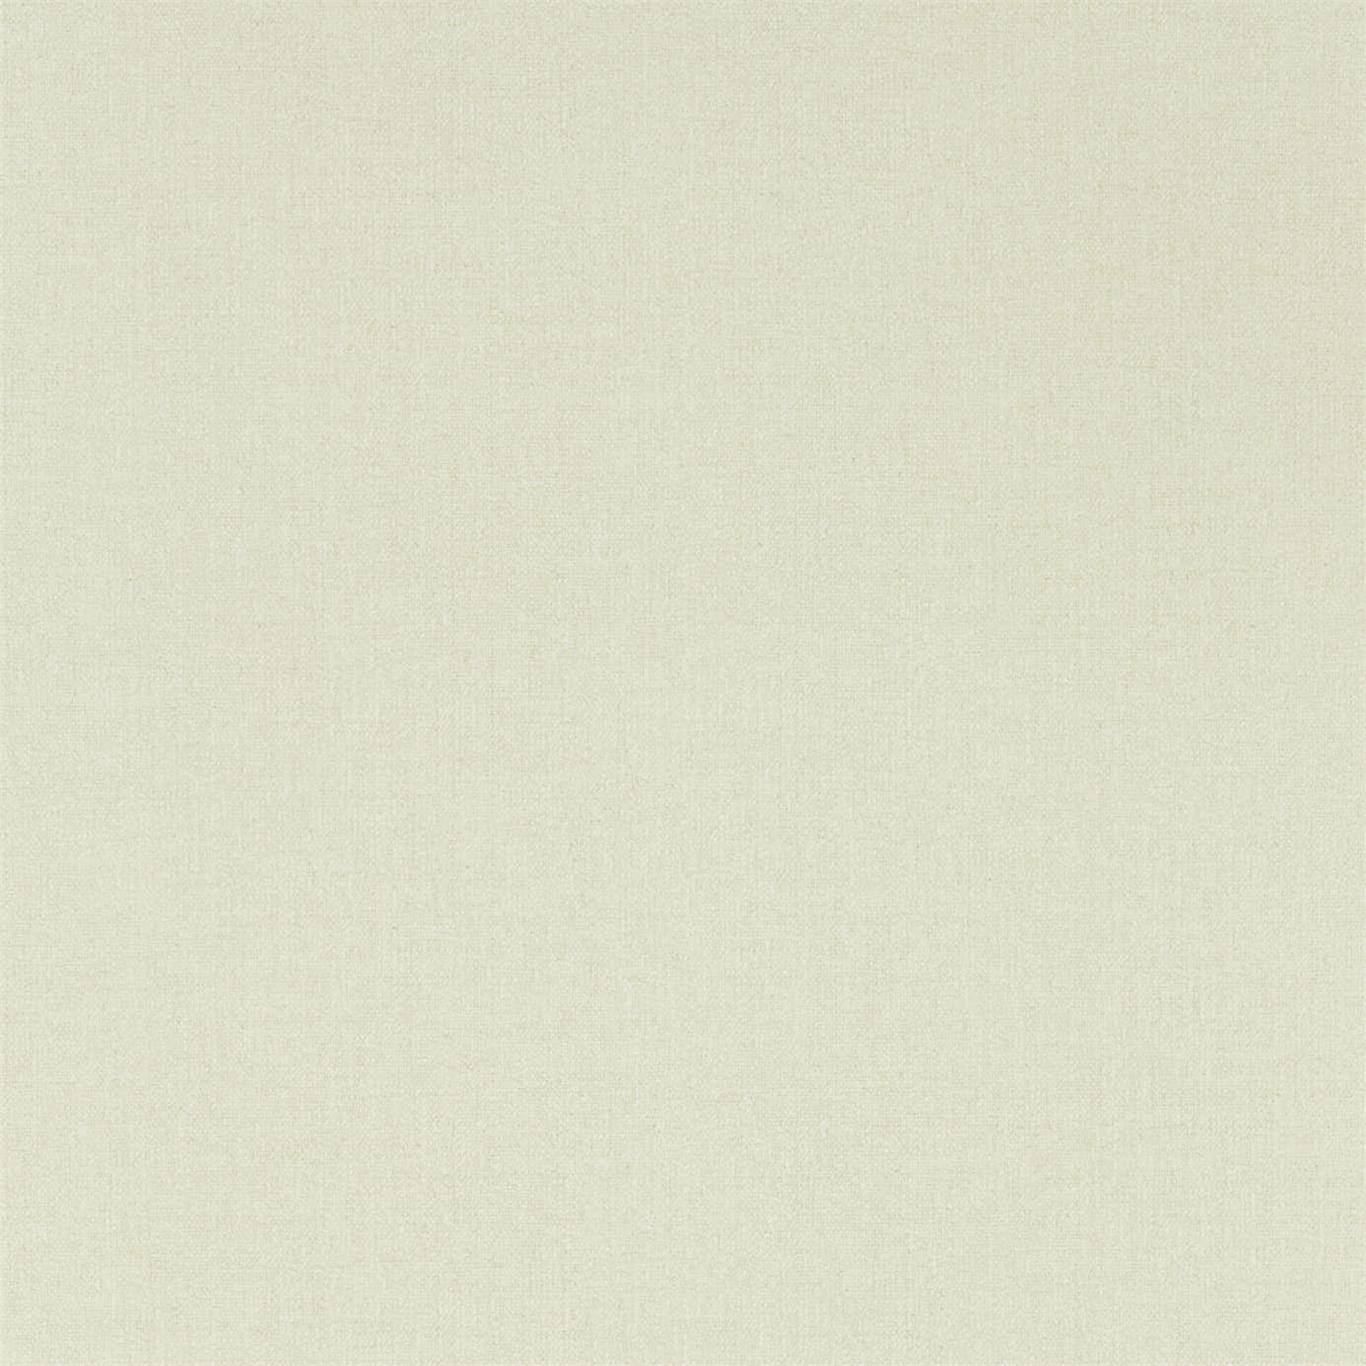 Soho Plain Birch White Wallpaper DLMW216910 by Sanderson